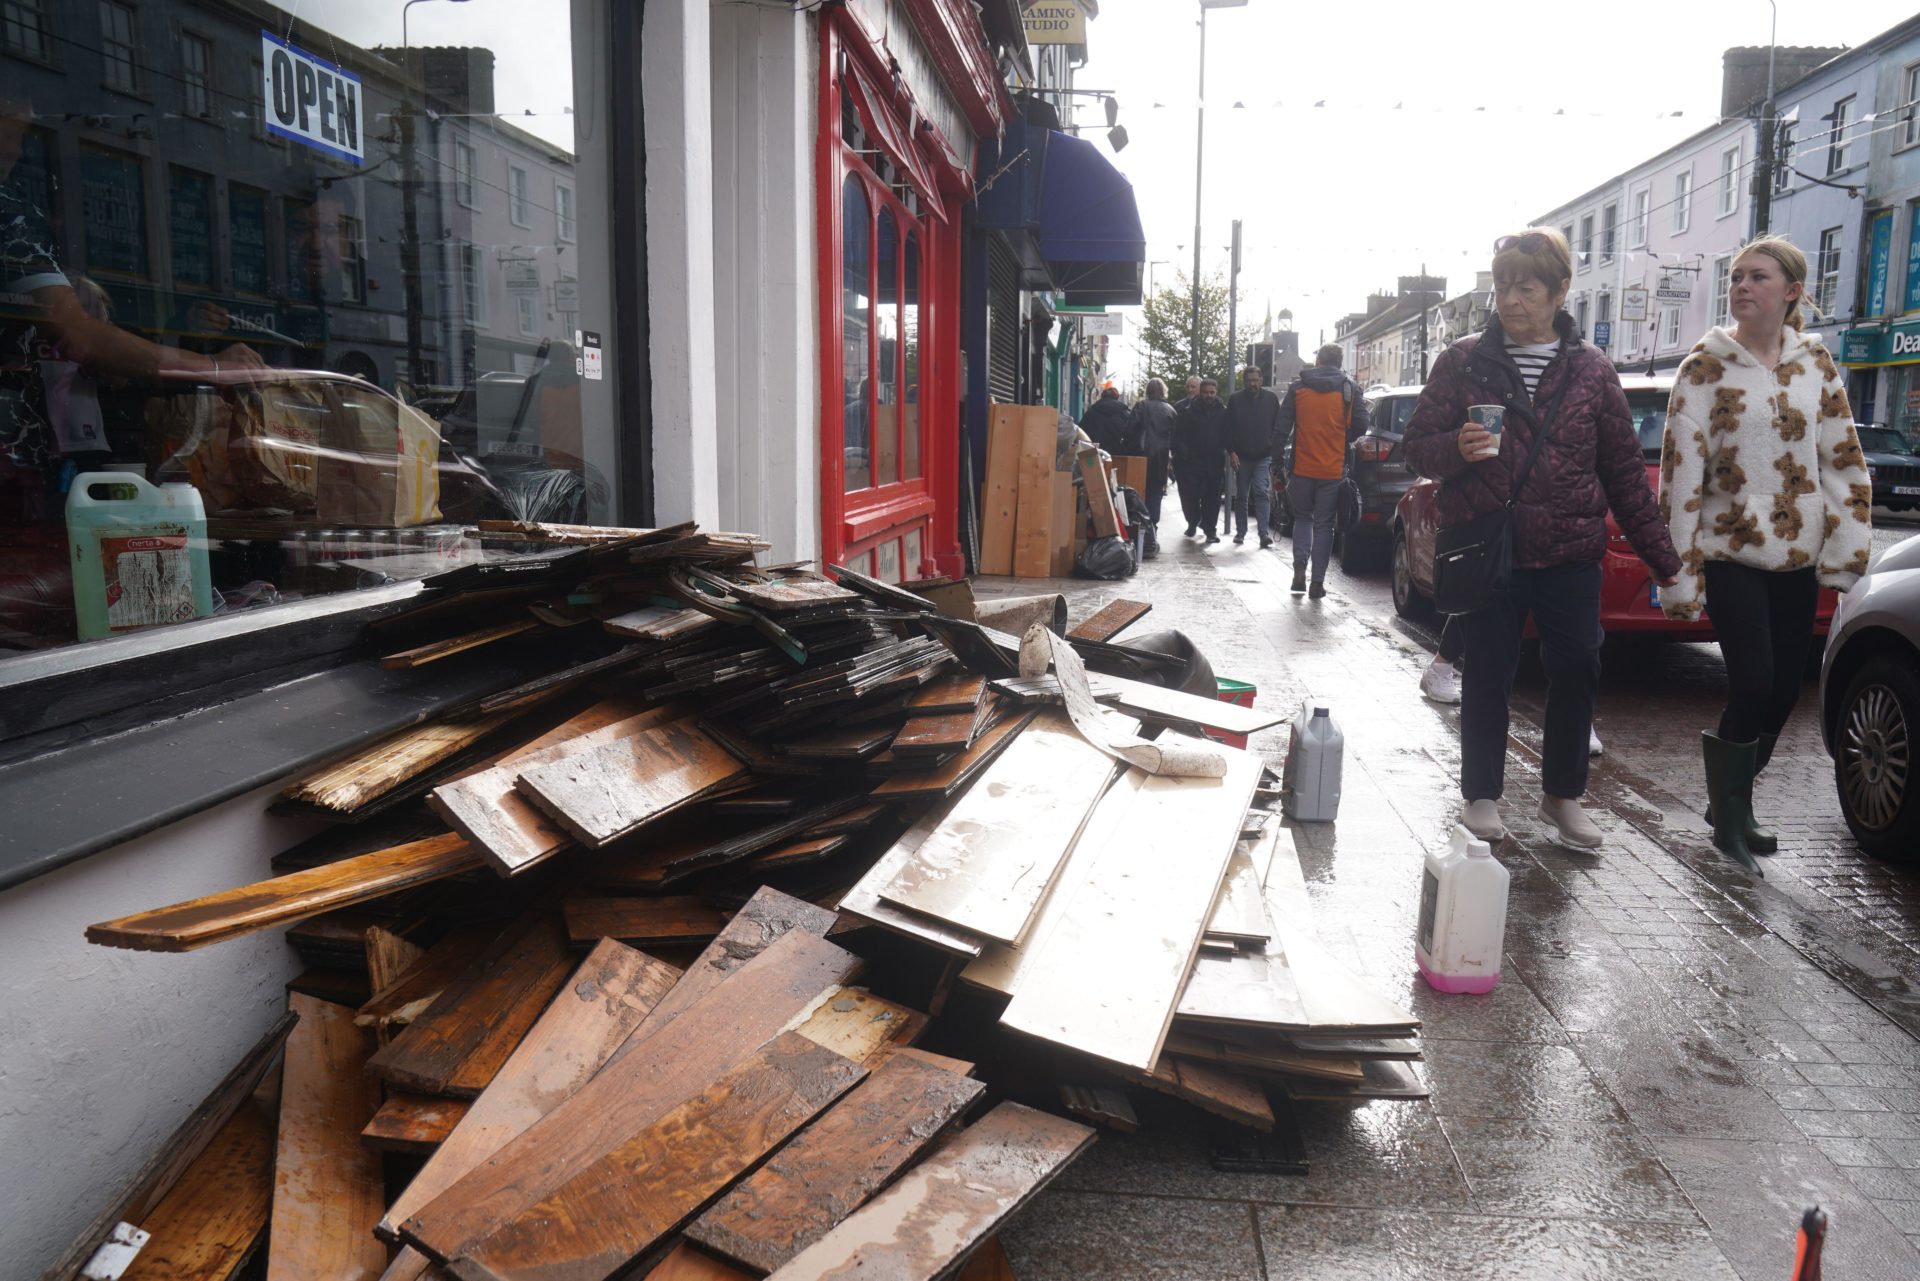 People walk past damaged shops on Main street in Midleton